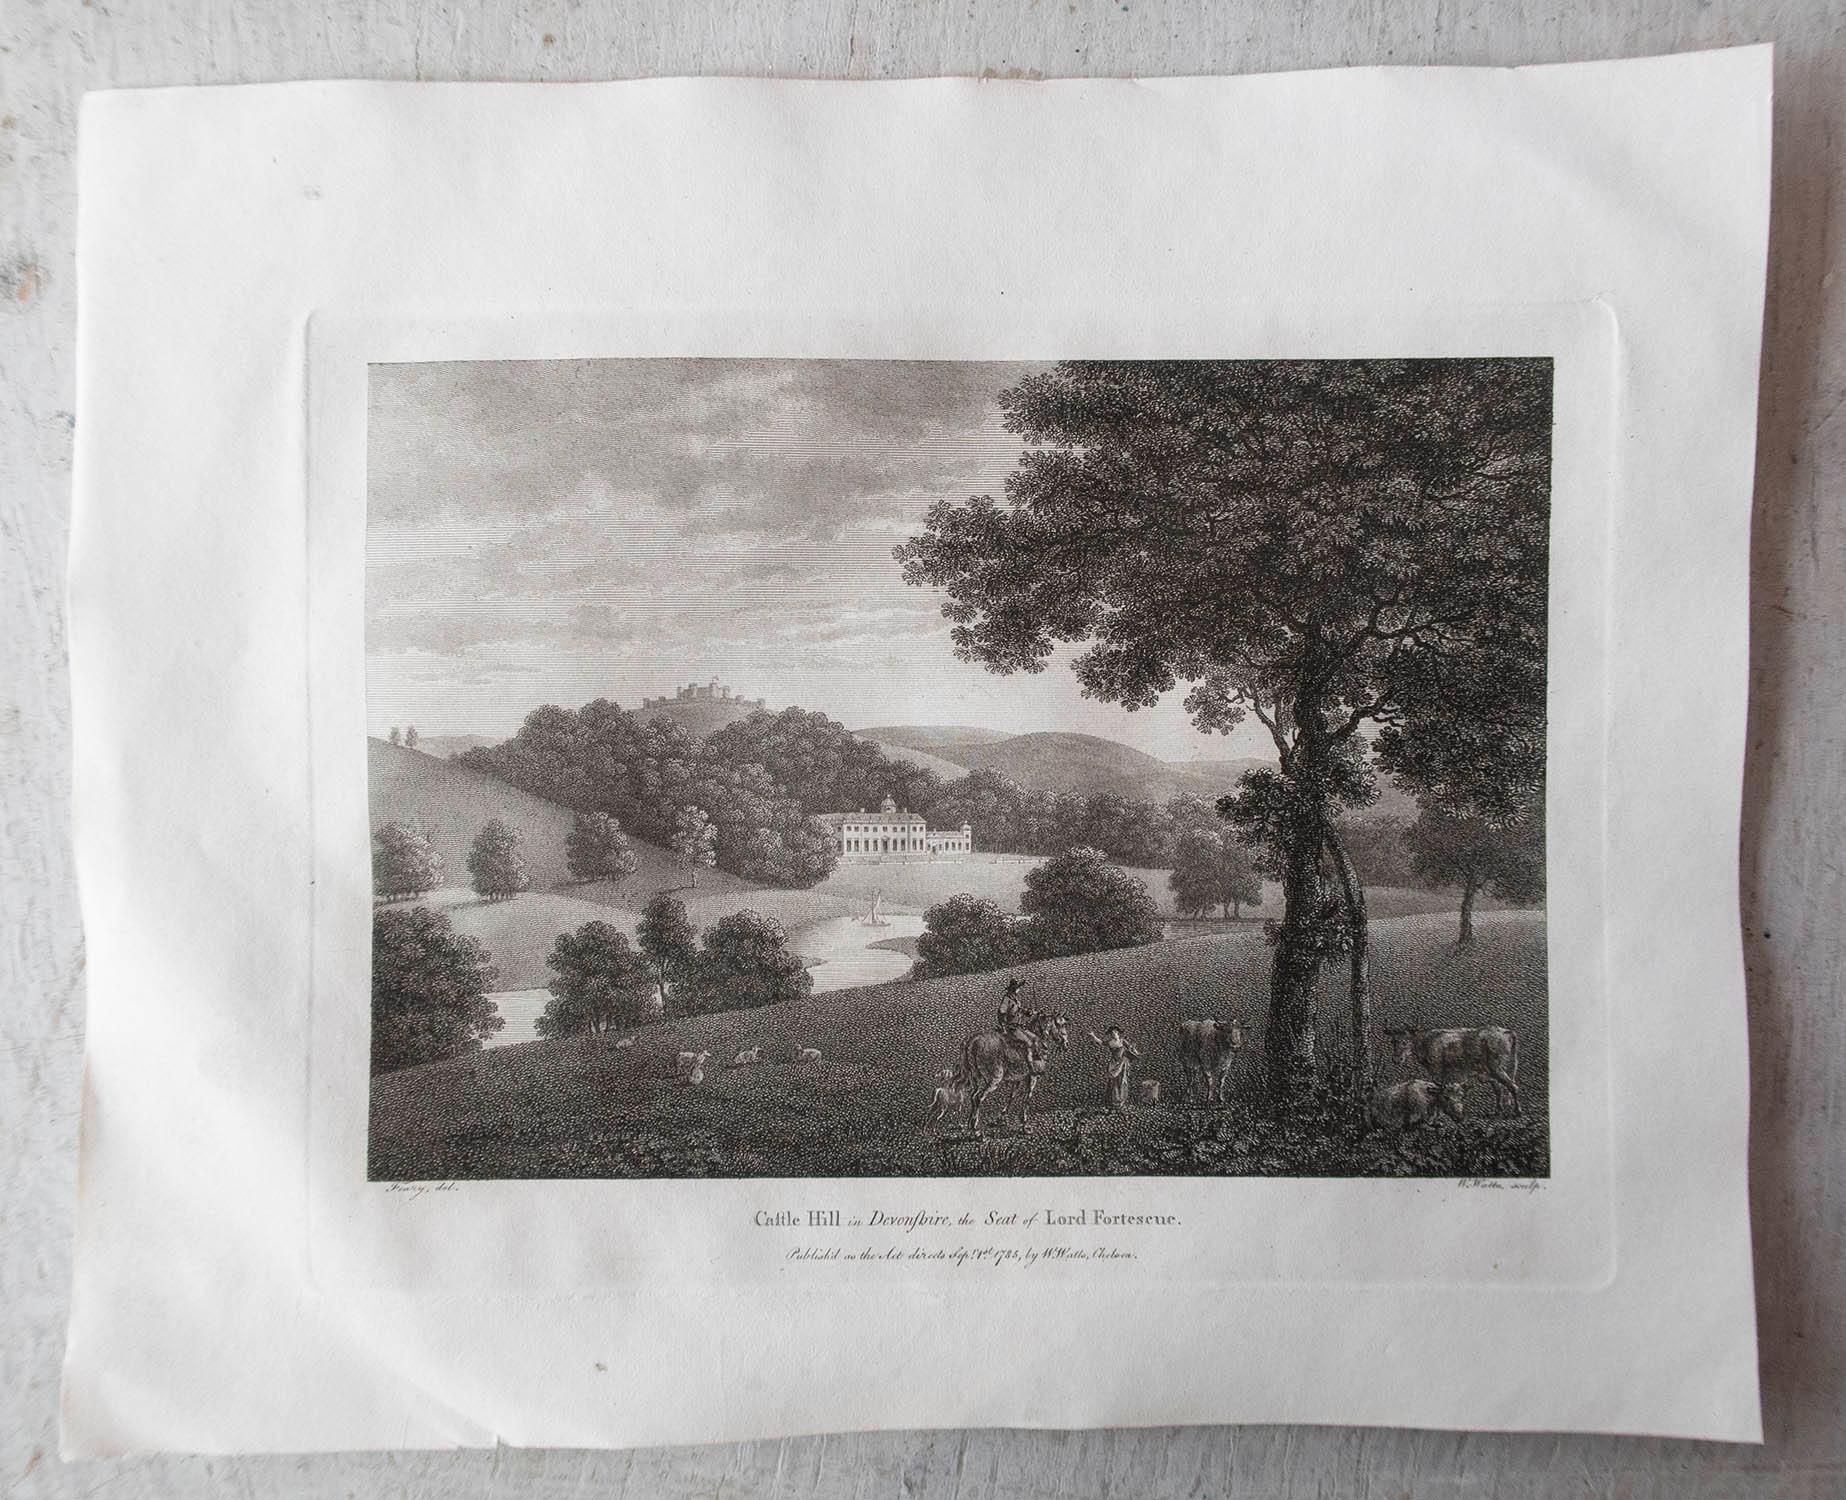 Georgian Set of 20 Original Antique Prints of English Country Houses and Gardens, C.1780